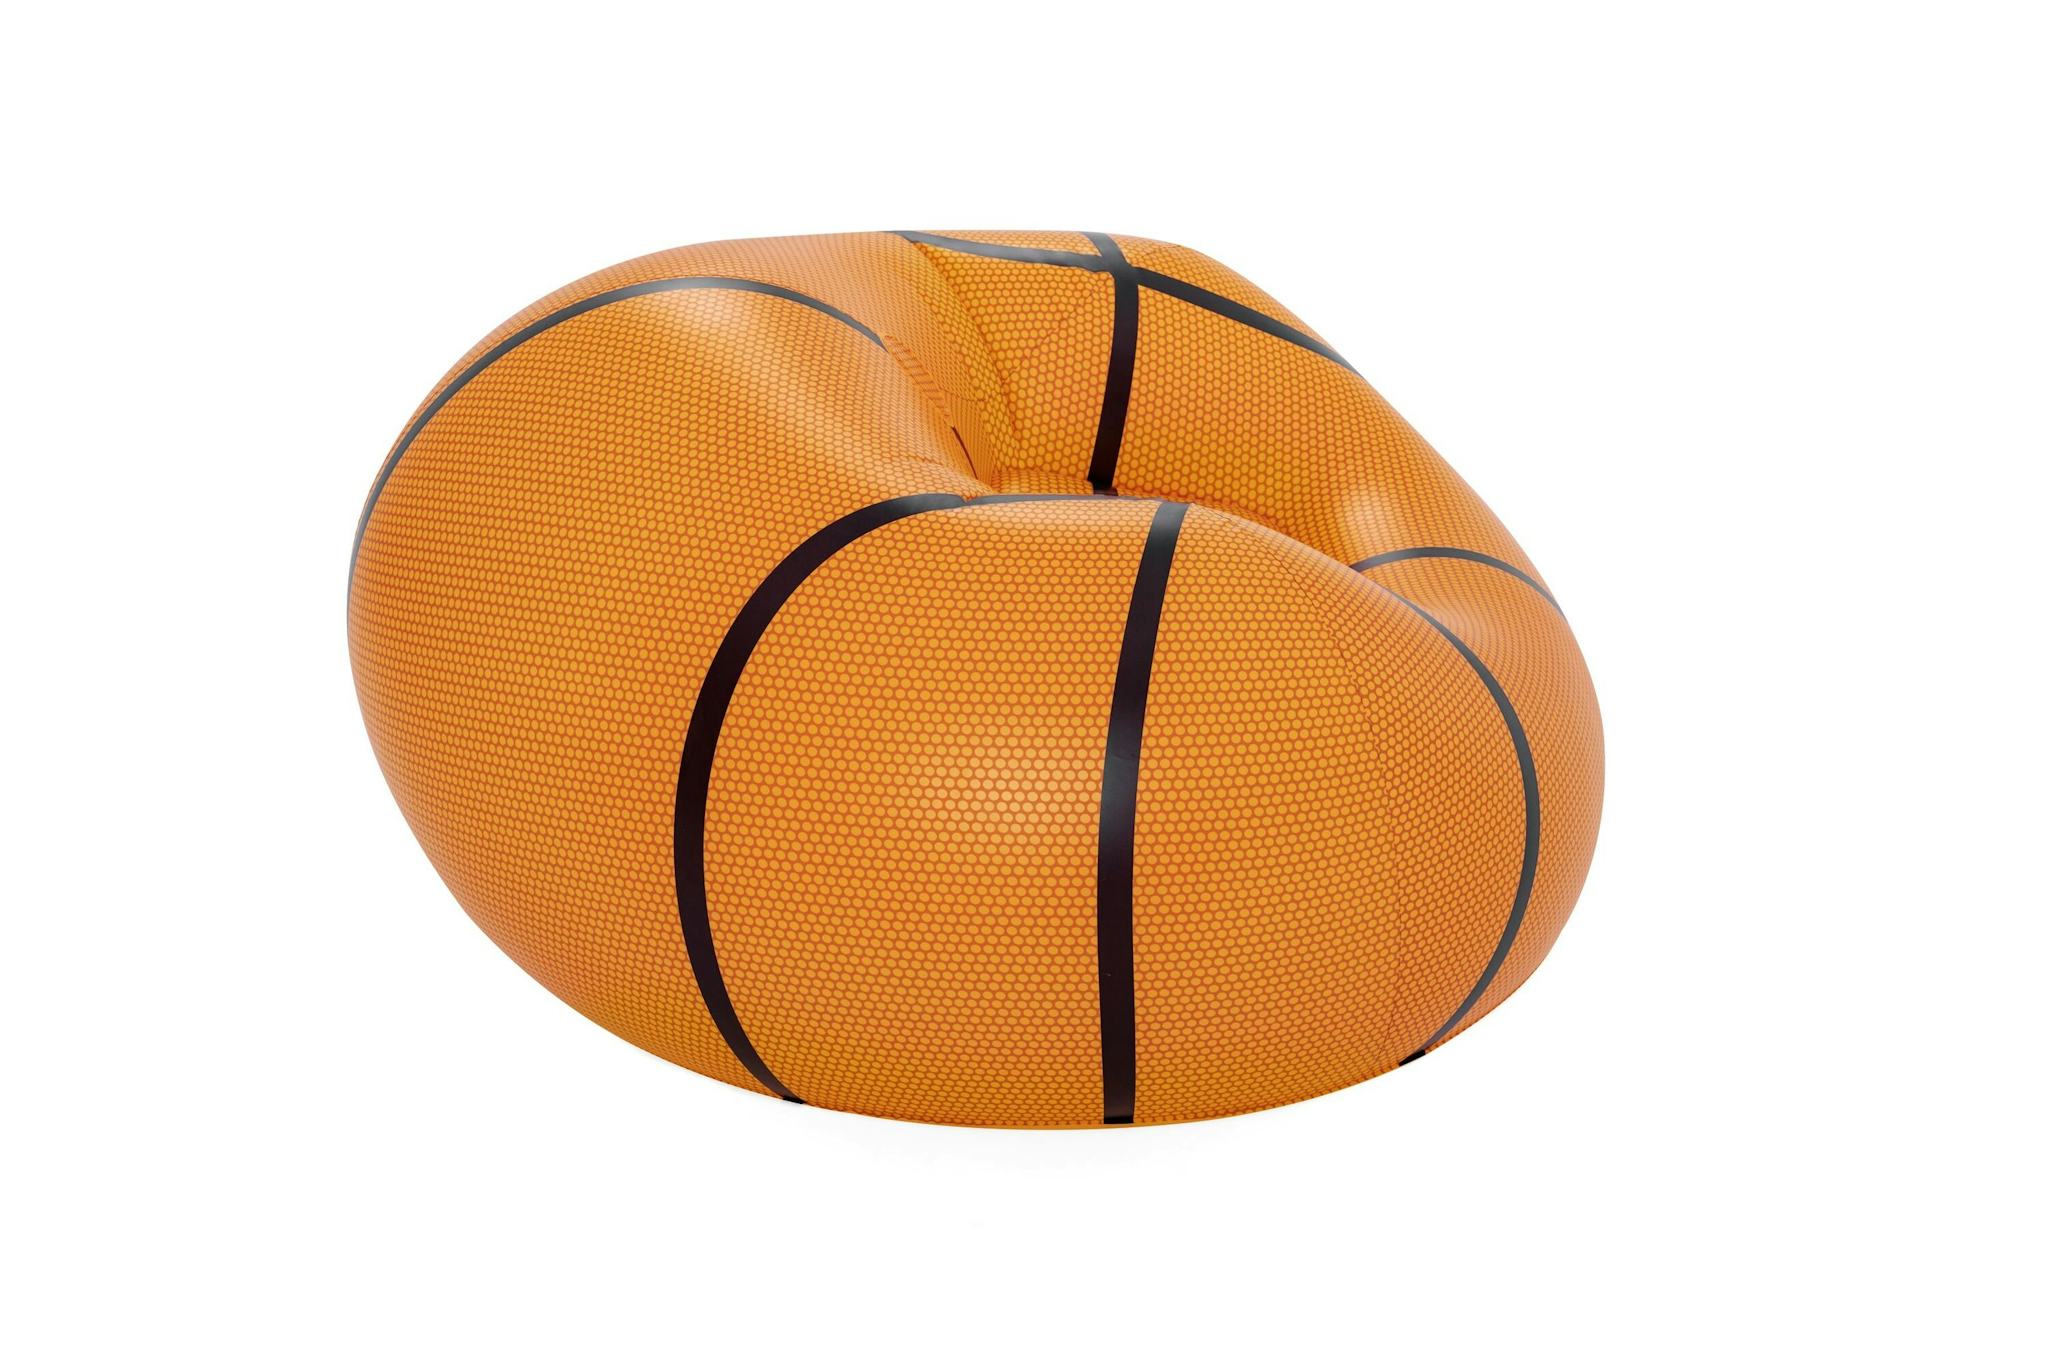 Giochi gonfiabili per bambini Poltrona pouf gonfiabile Basketball Bestway 14